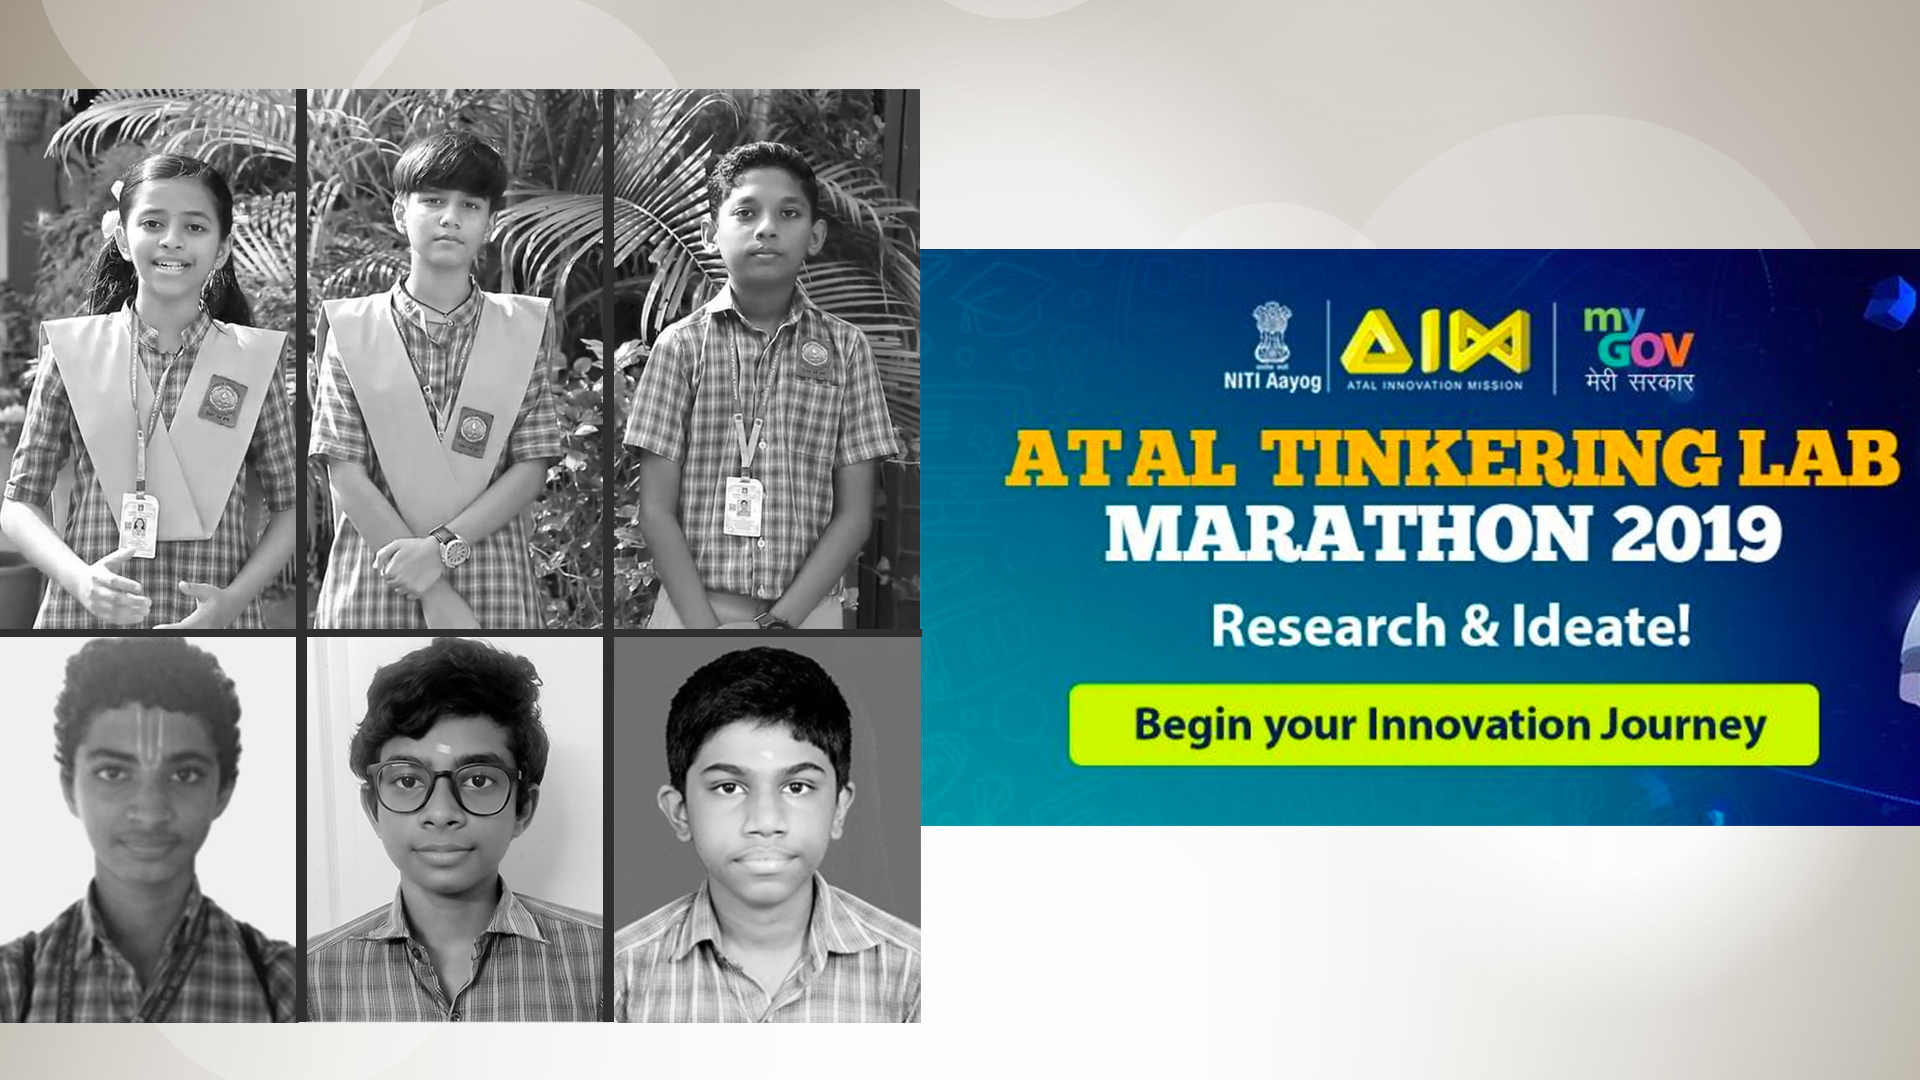 Two Amrita Vidyalayams among the top 20 Winners of the ATL Tinkering Marathon 2019